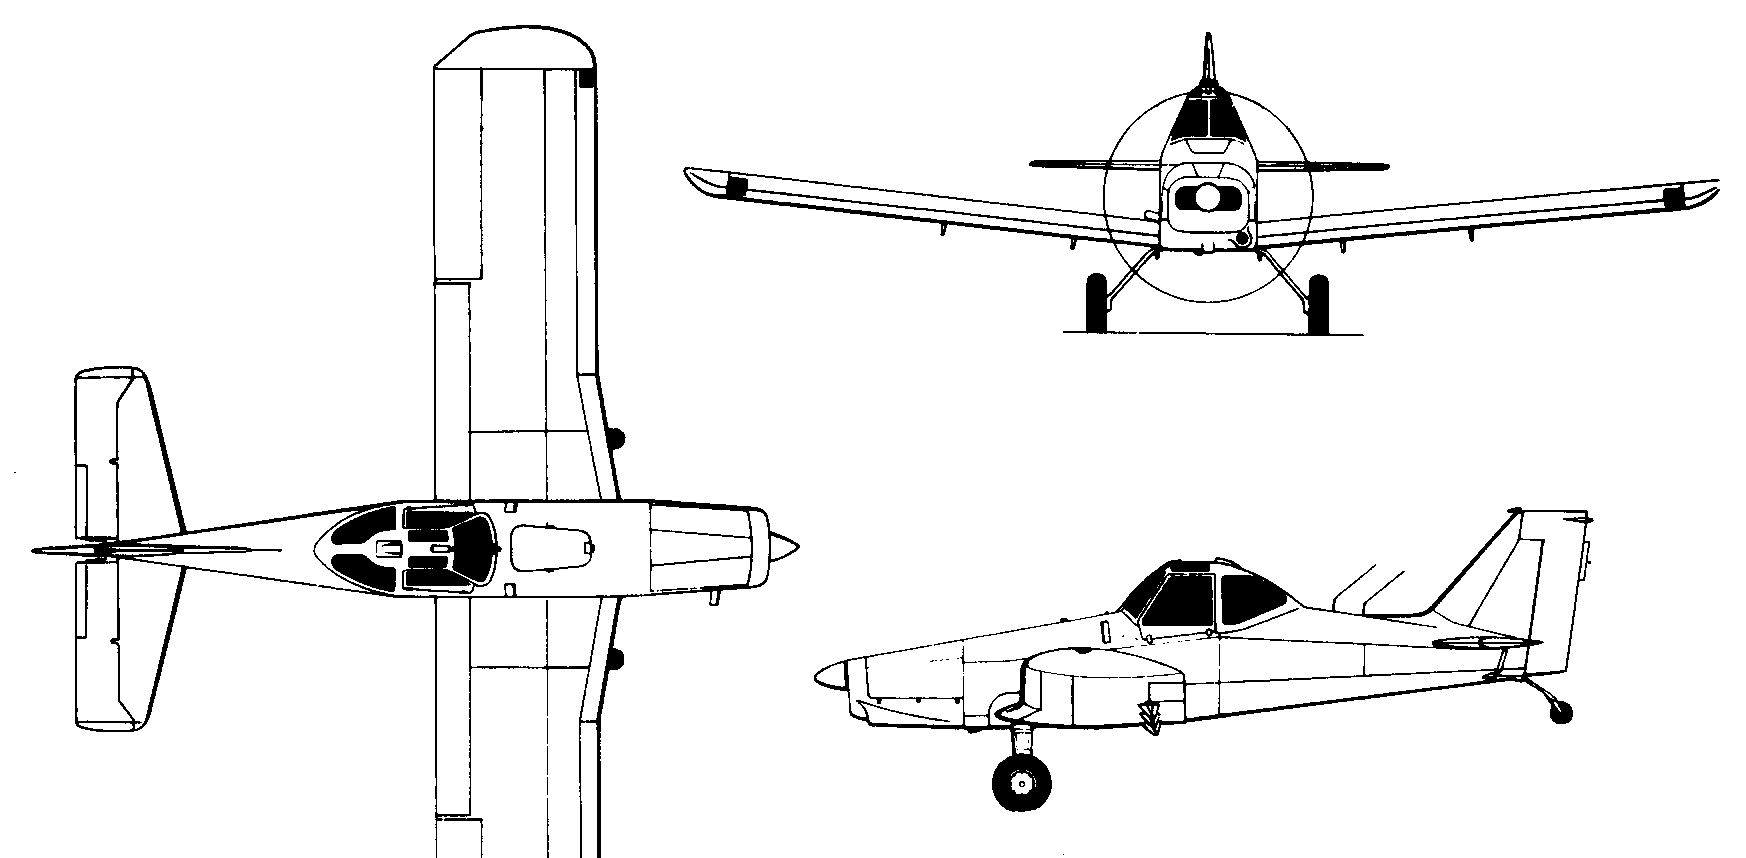 Piper PA-25 Pawnee next